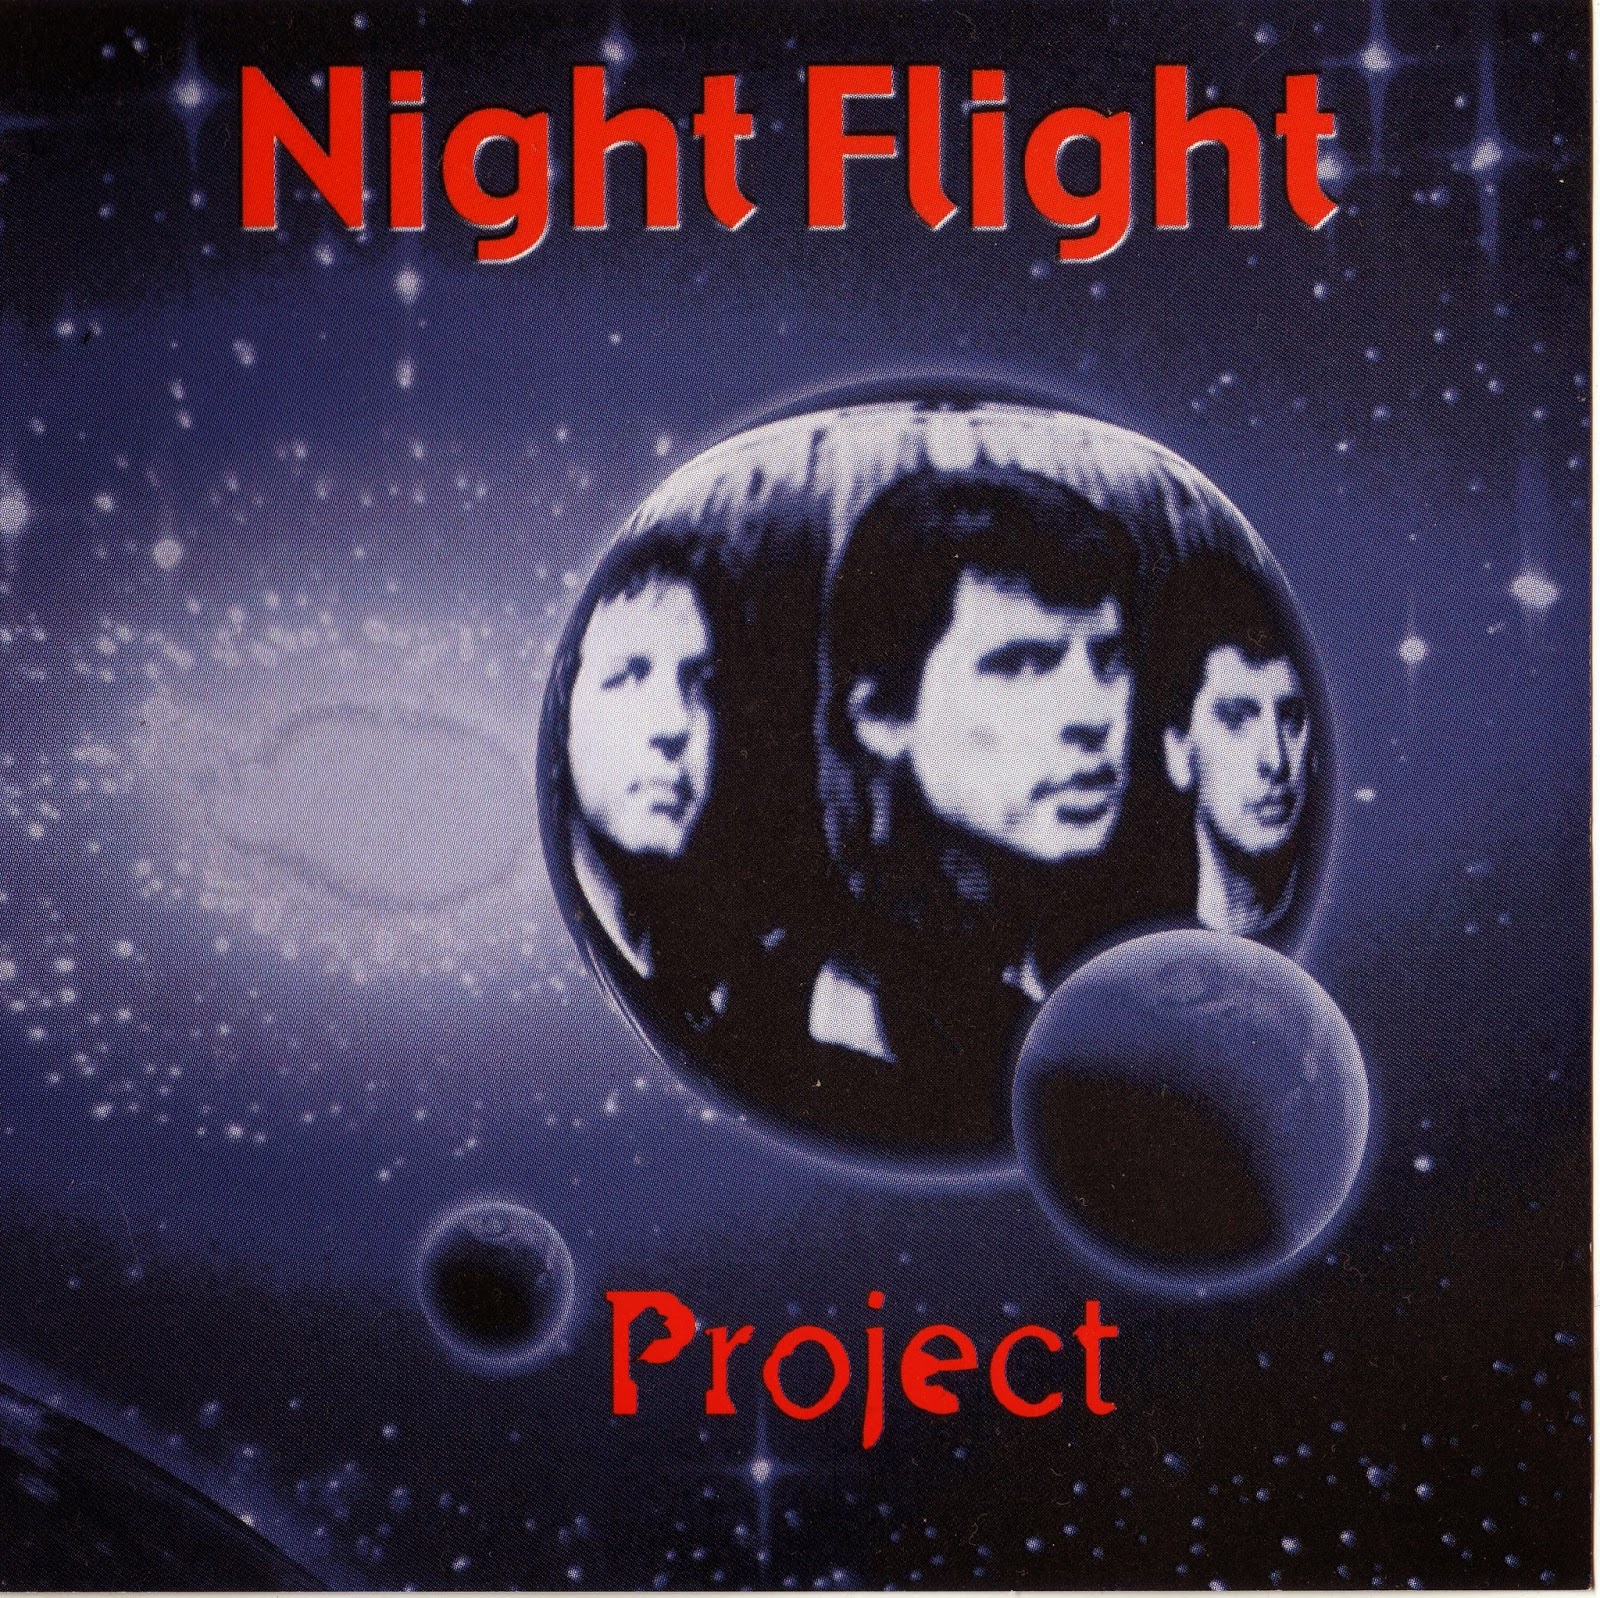 Night Flight. 1981 - Nightflight. Project Flight. Project Night. Ночь трио